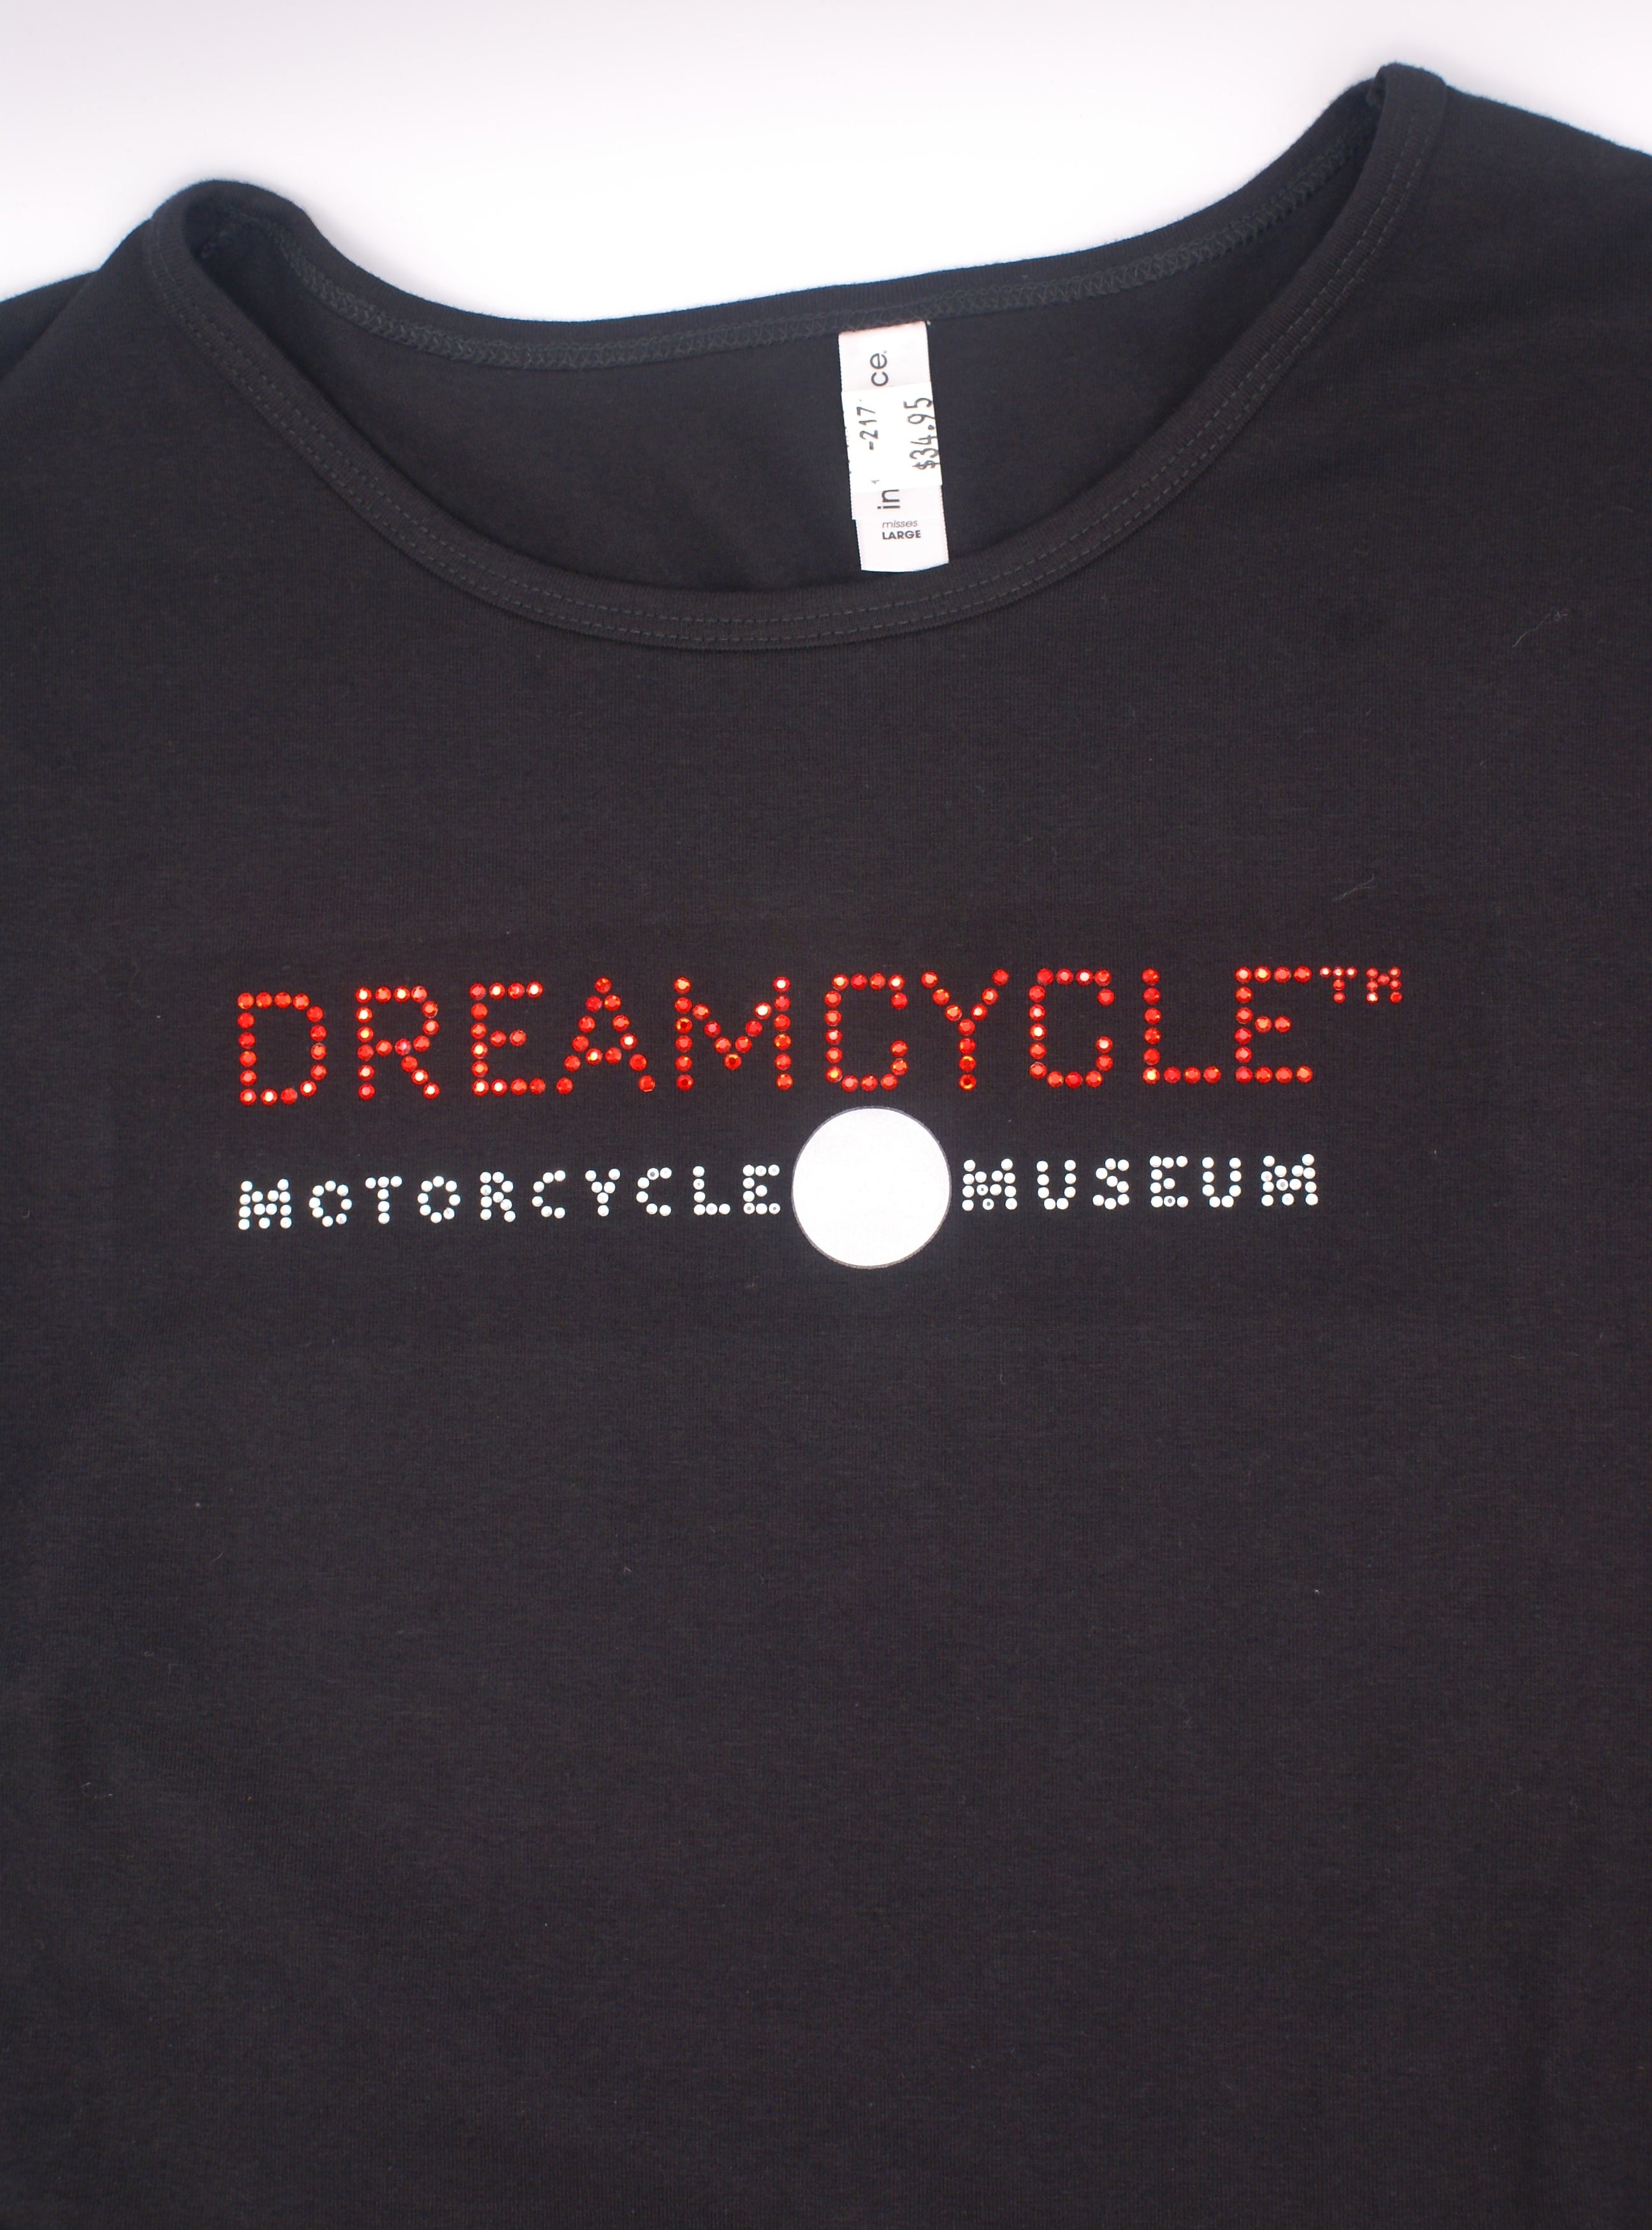 Dreamcycle Ladies Dazzle long sleeve